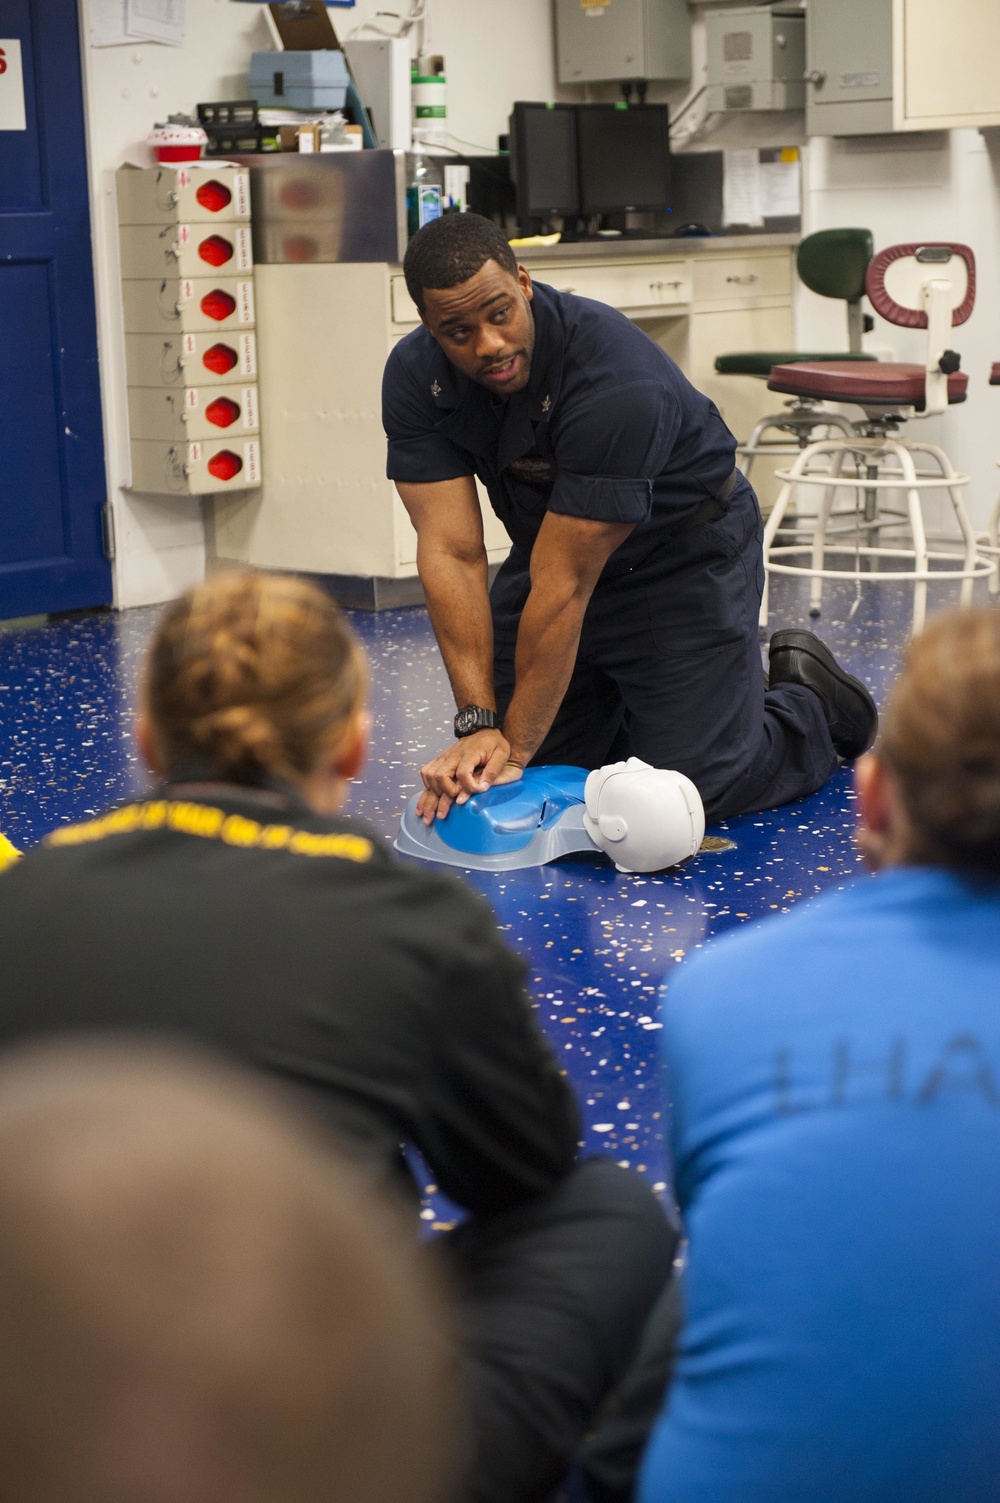 Hospital Corpsman teaches USS America Sailors CPR basics